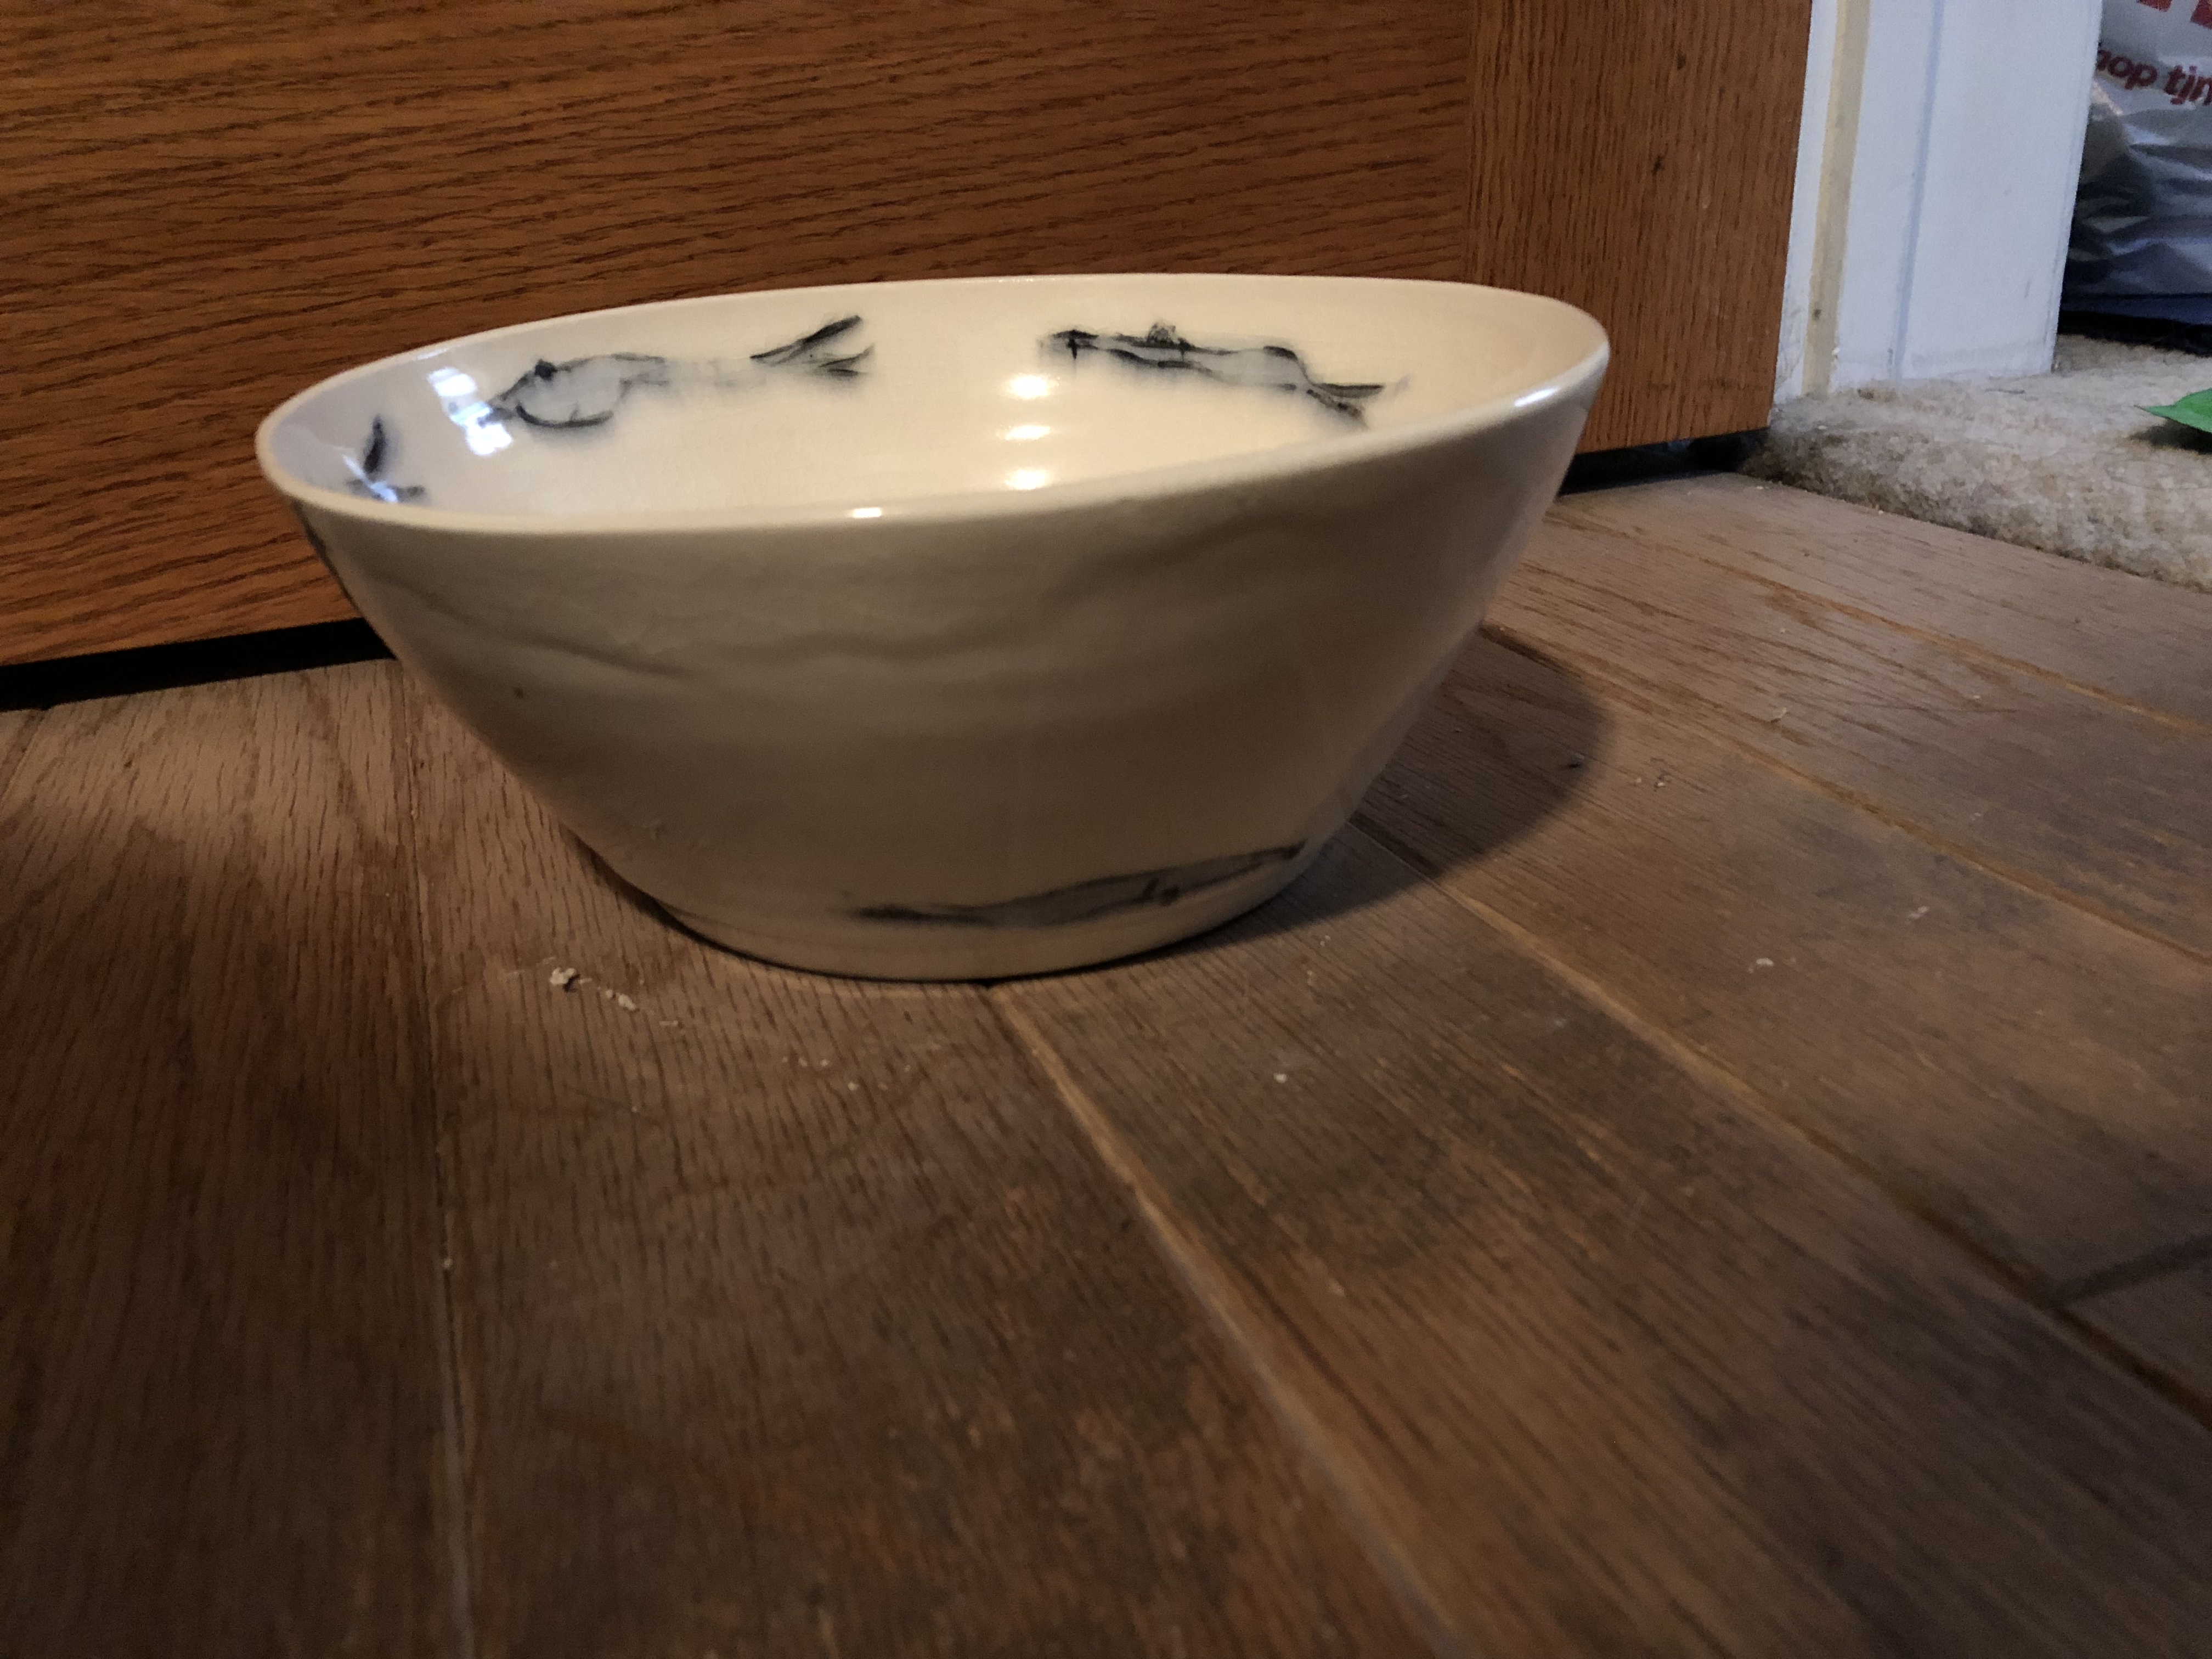 Image of a ceramic bowl